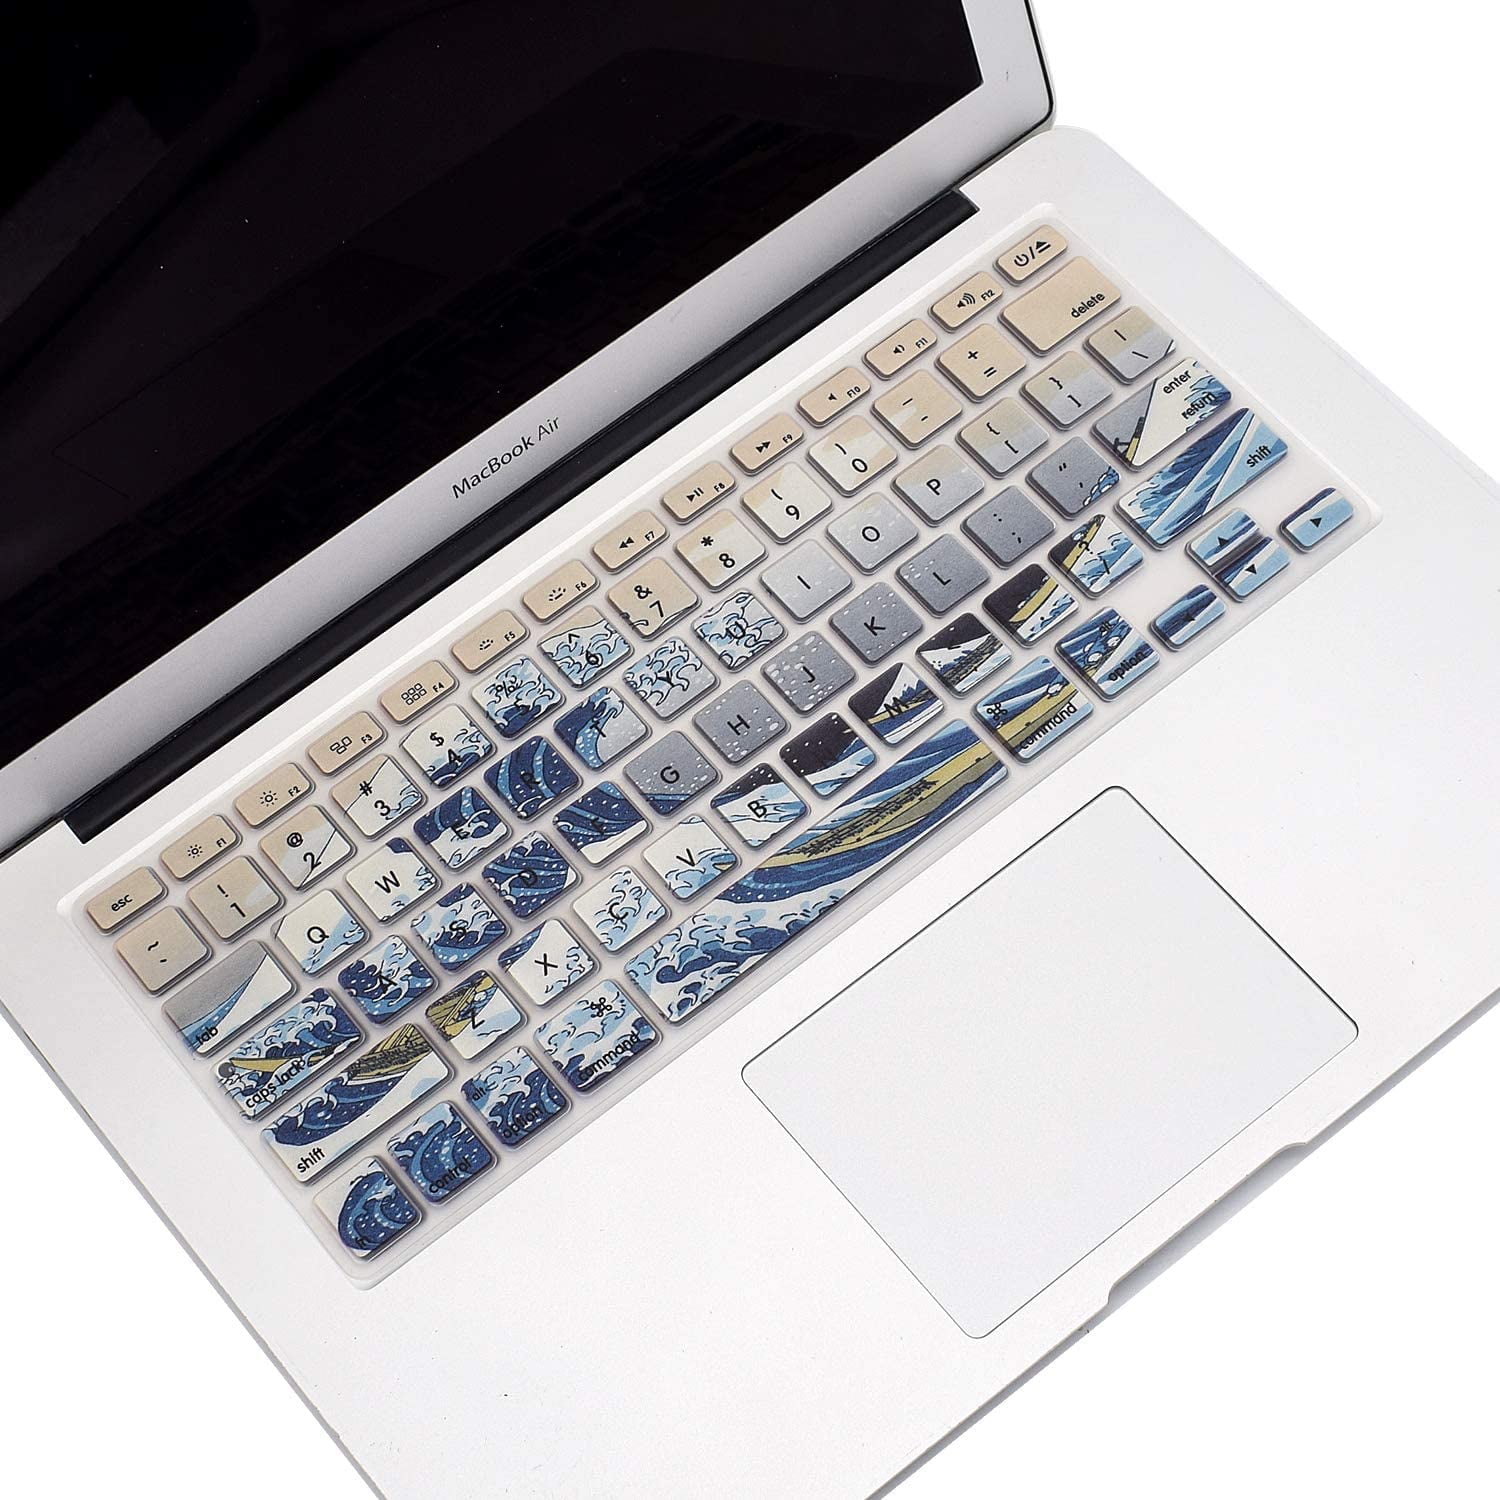 送料店舗負担  A1466 13inch Air MacBook ノートPC